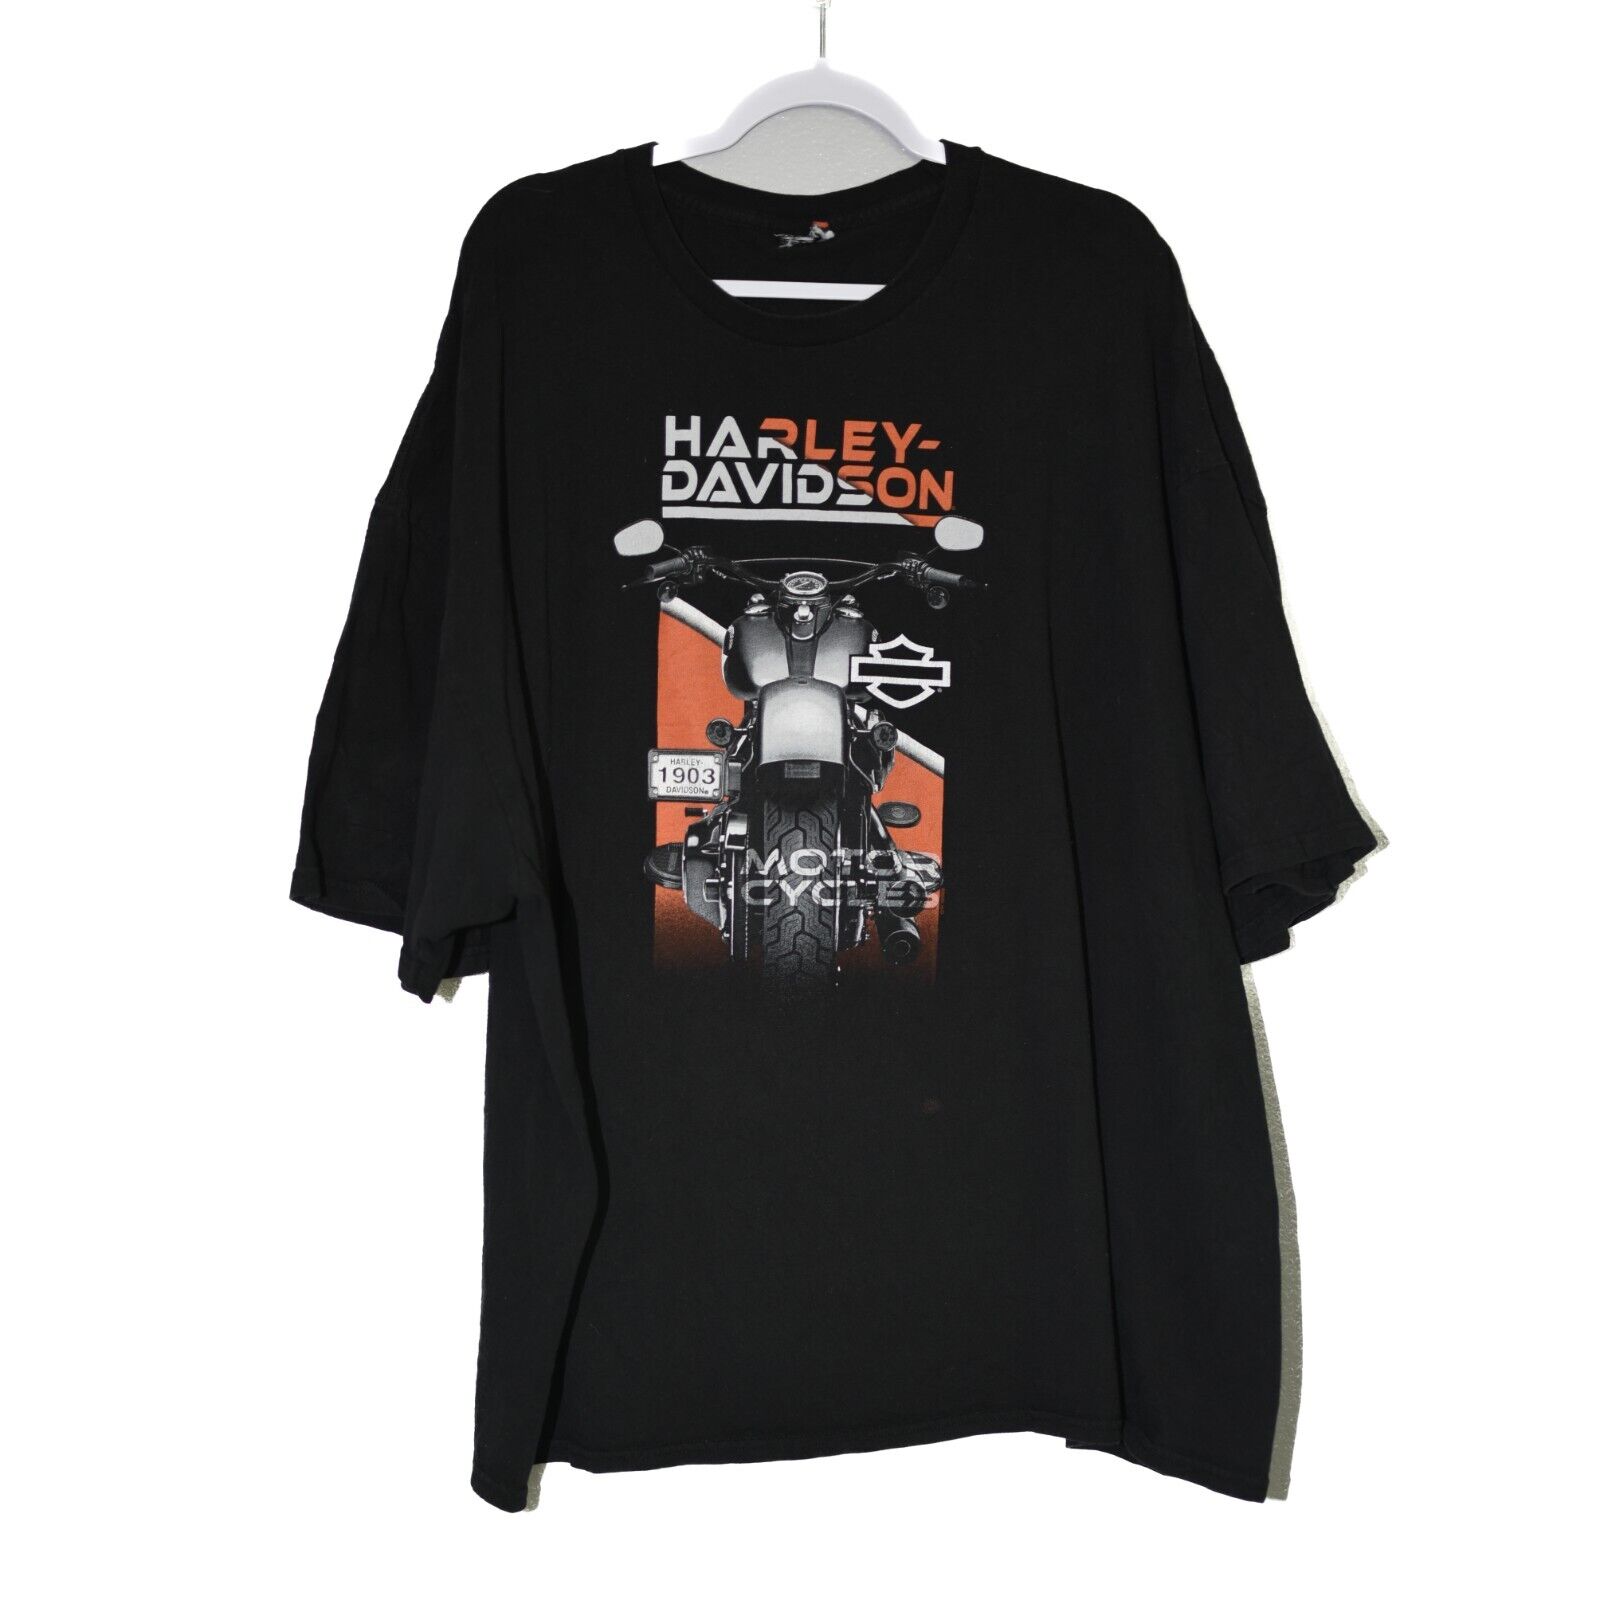 Harley Davidson Boston, MA Mens T-Shirt Black Cotton Short Sleeve Crew Neck